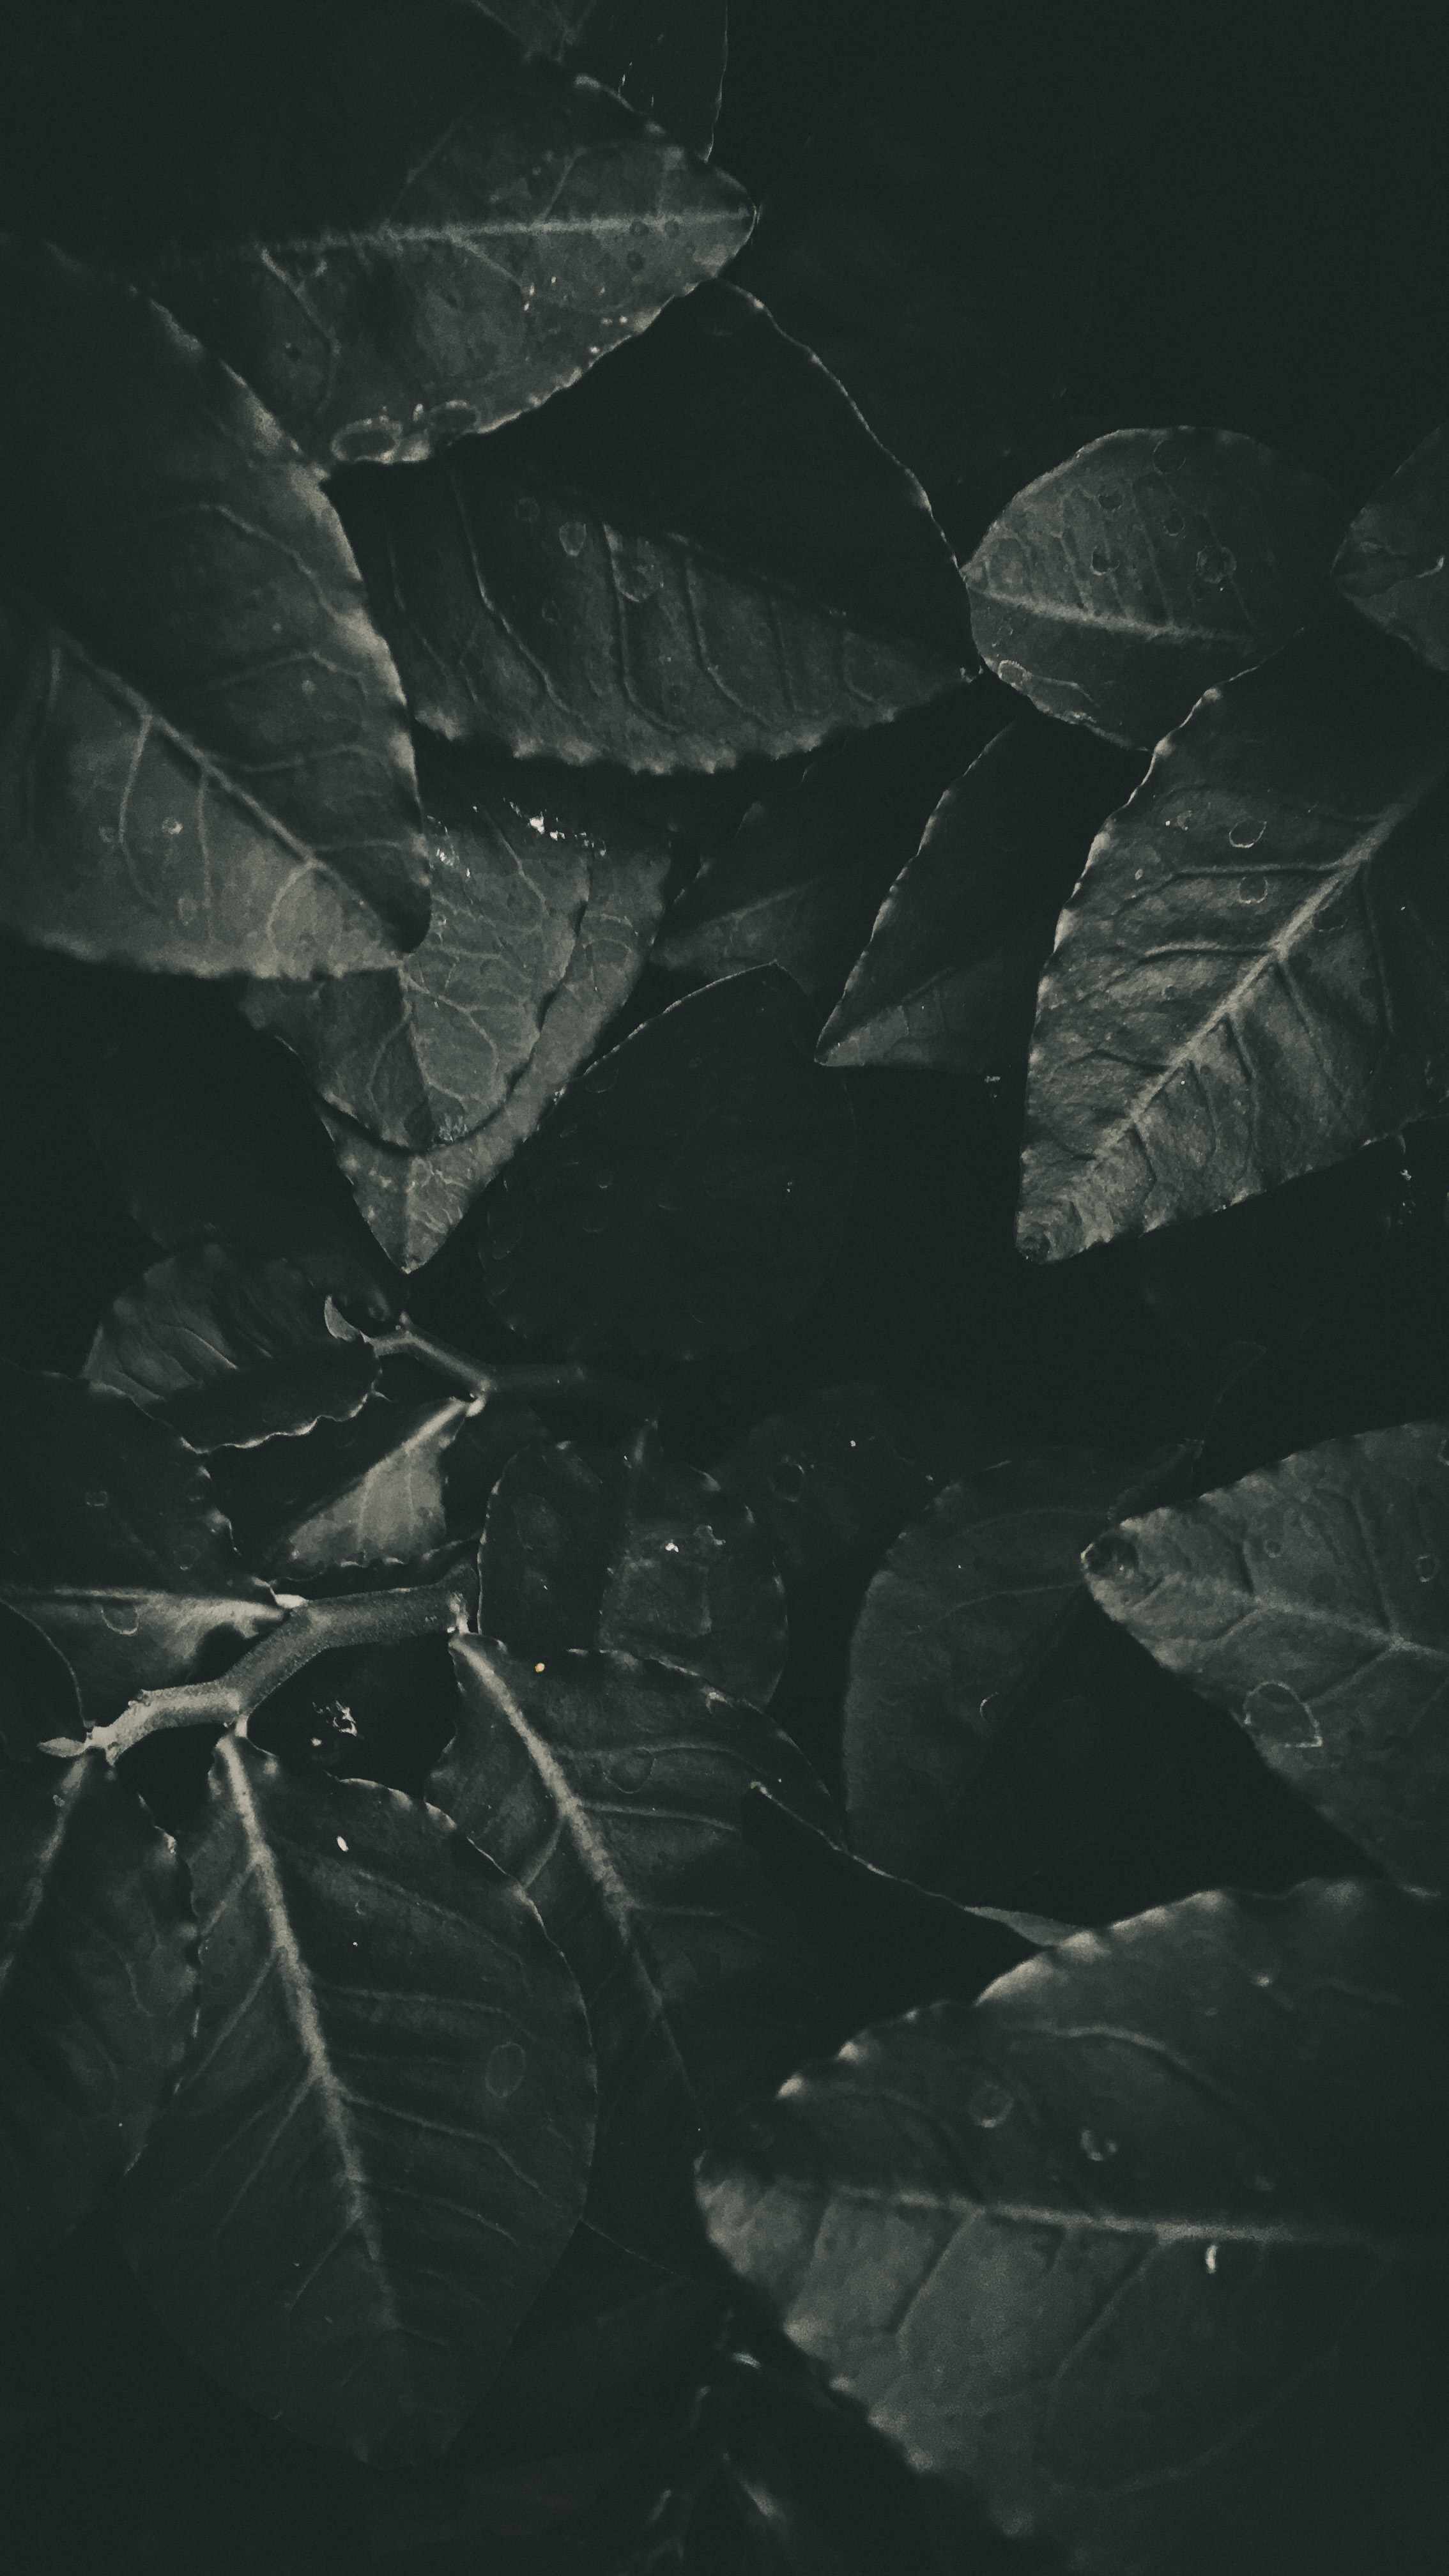 bw, dark, leaves, chb, foliage wallpaper for mobile